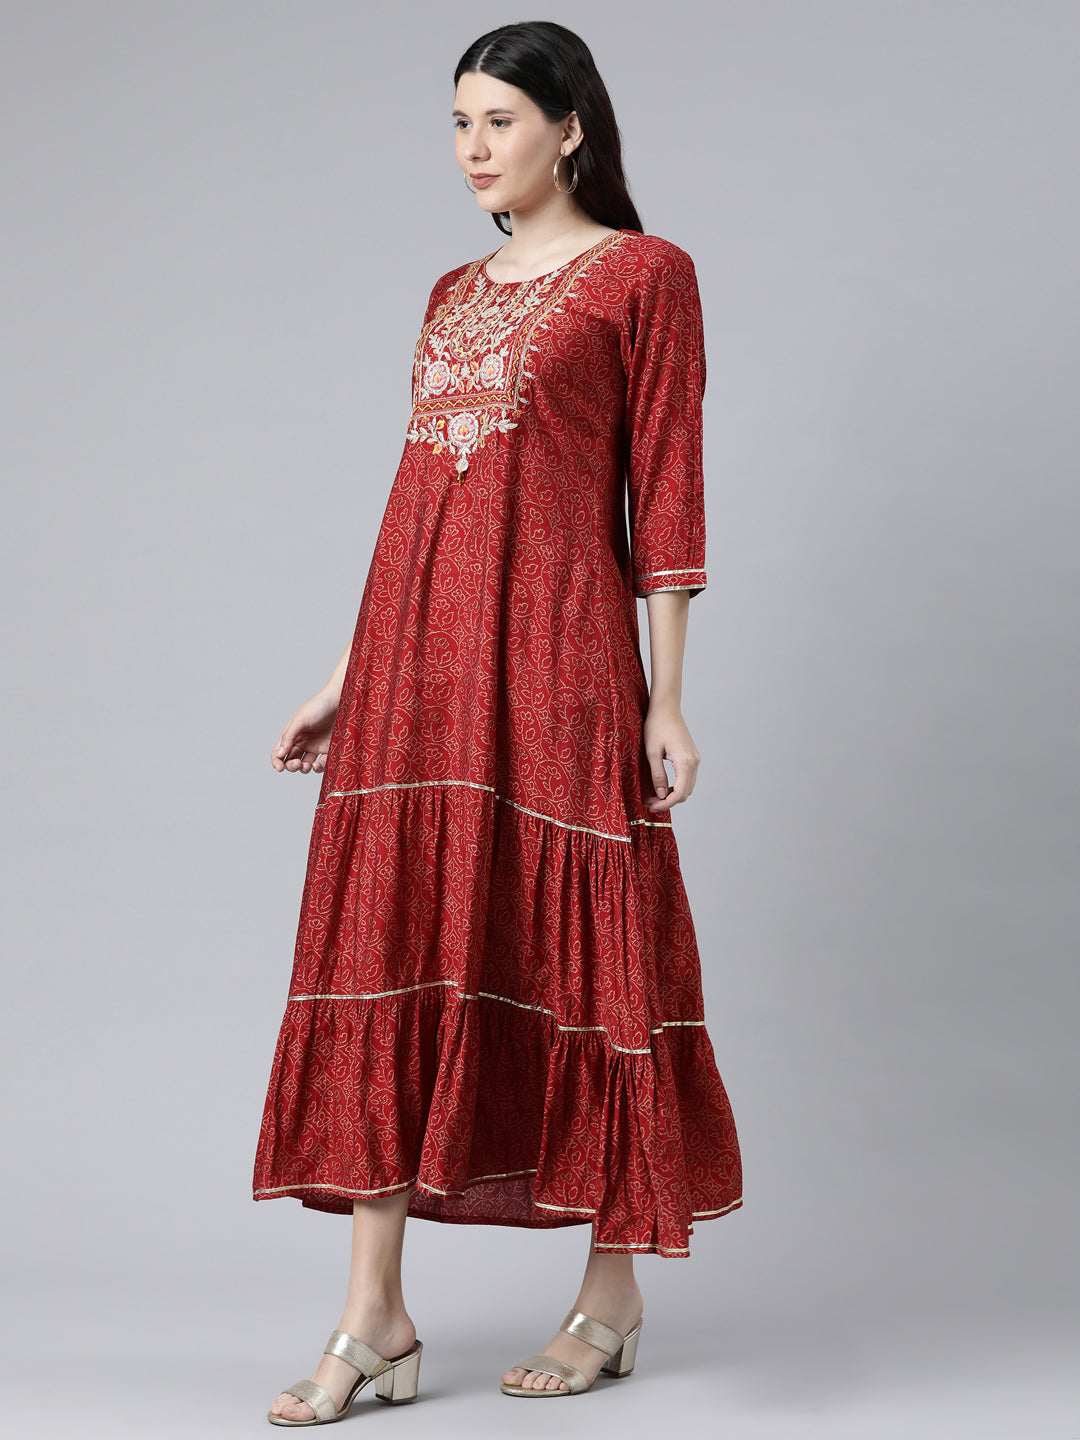 Neeru's Maroon Cotton Ethnic Motifs Embroidered Ethnic A-Line Maxi Dress